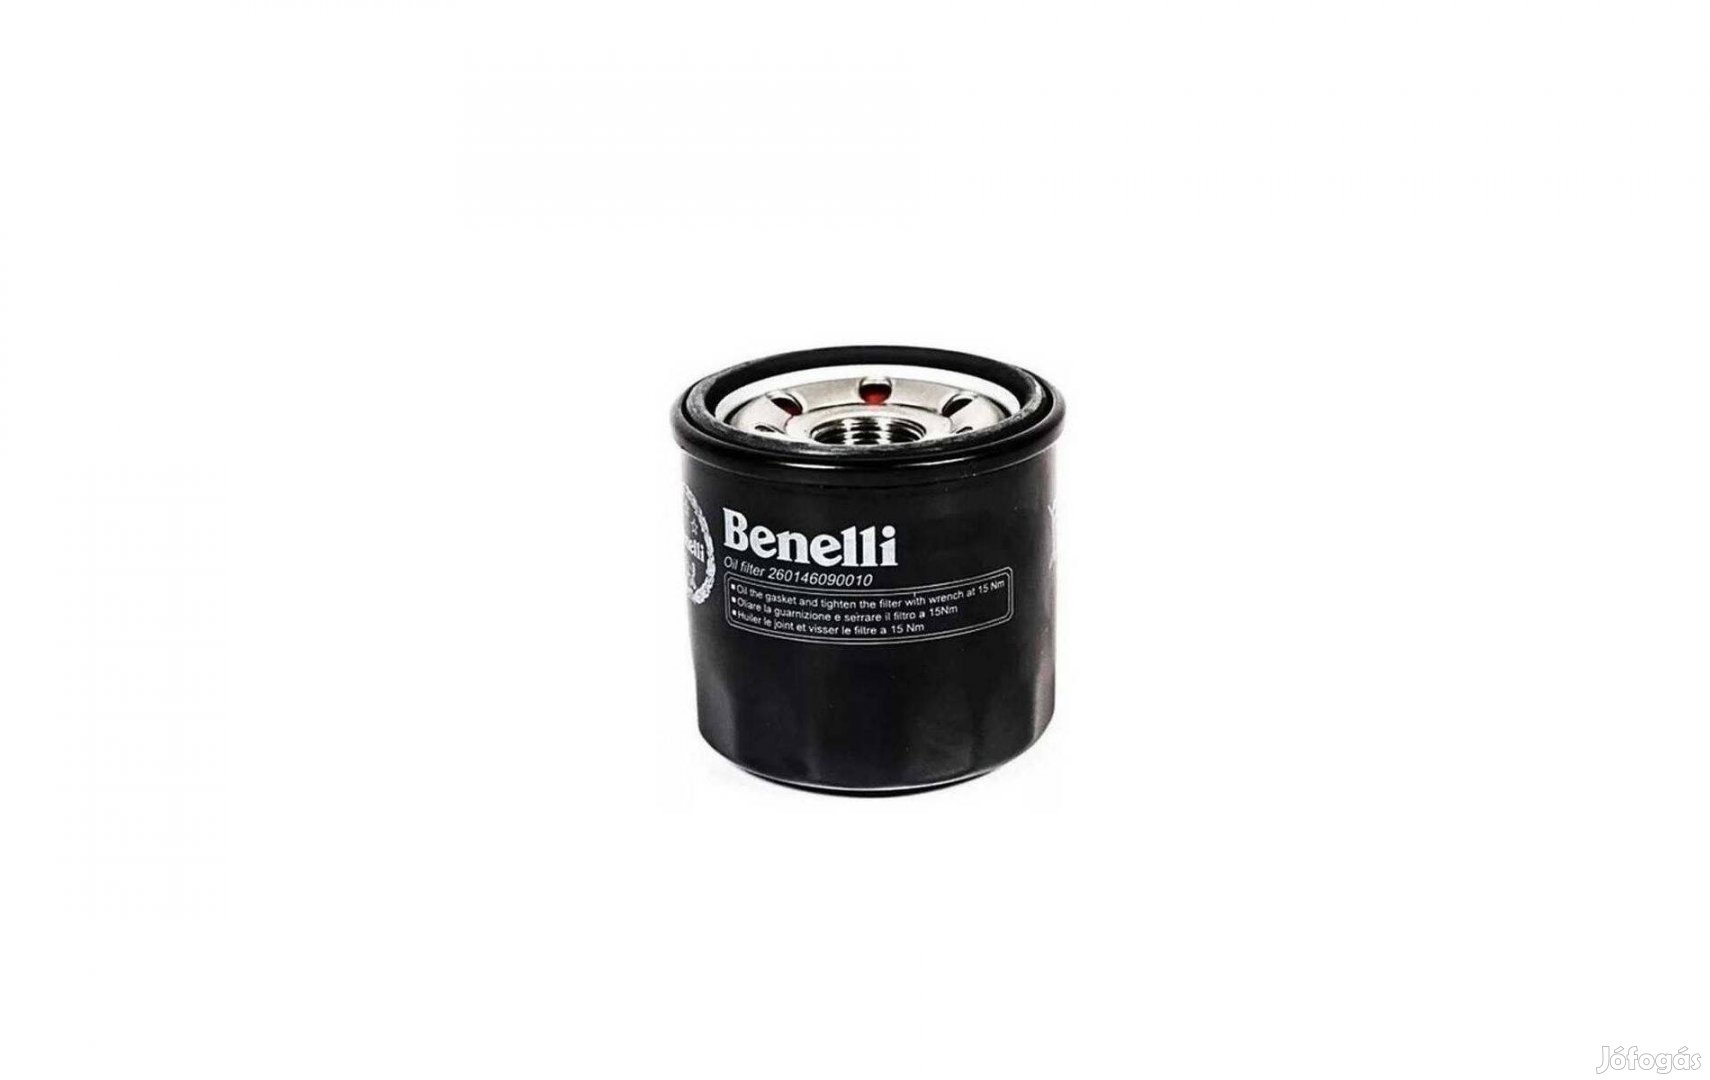 Benelli 302 502 752 BN Leoncino TNT Tornado Tre-K TRK új gyári olajszű